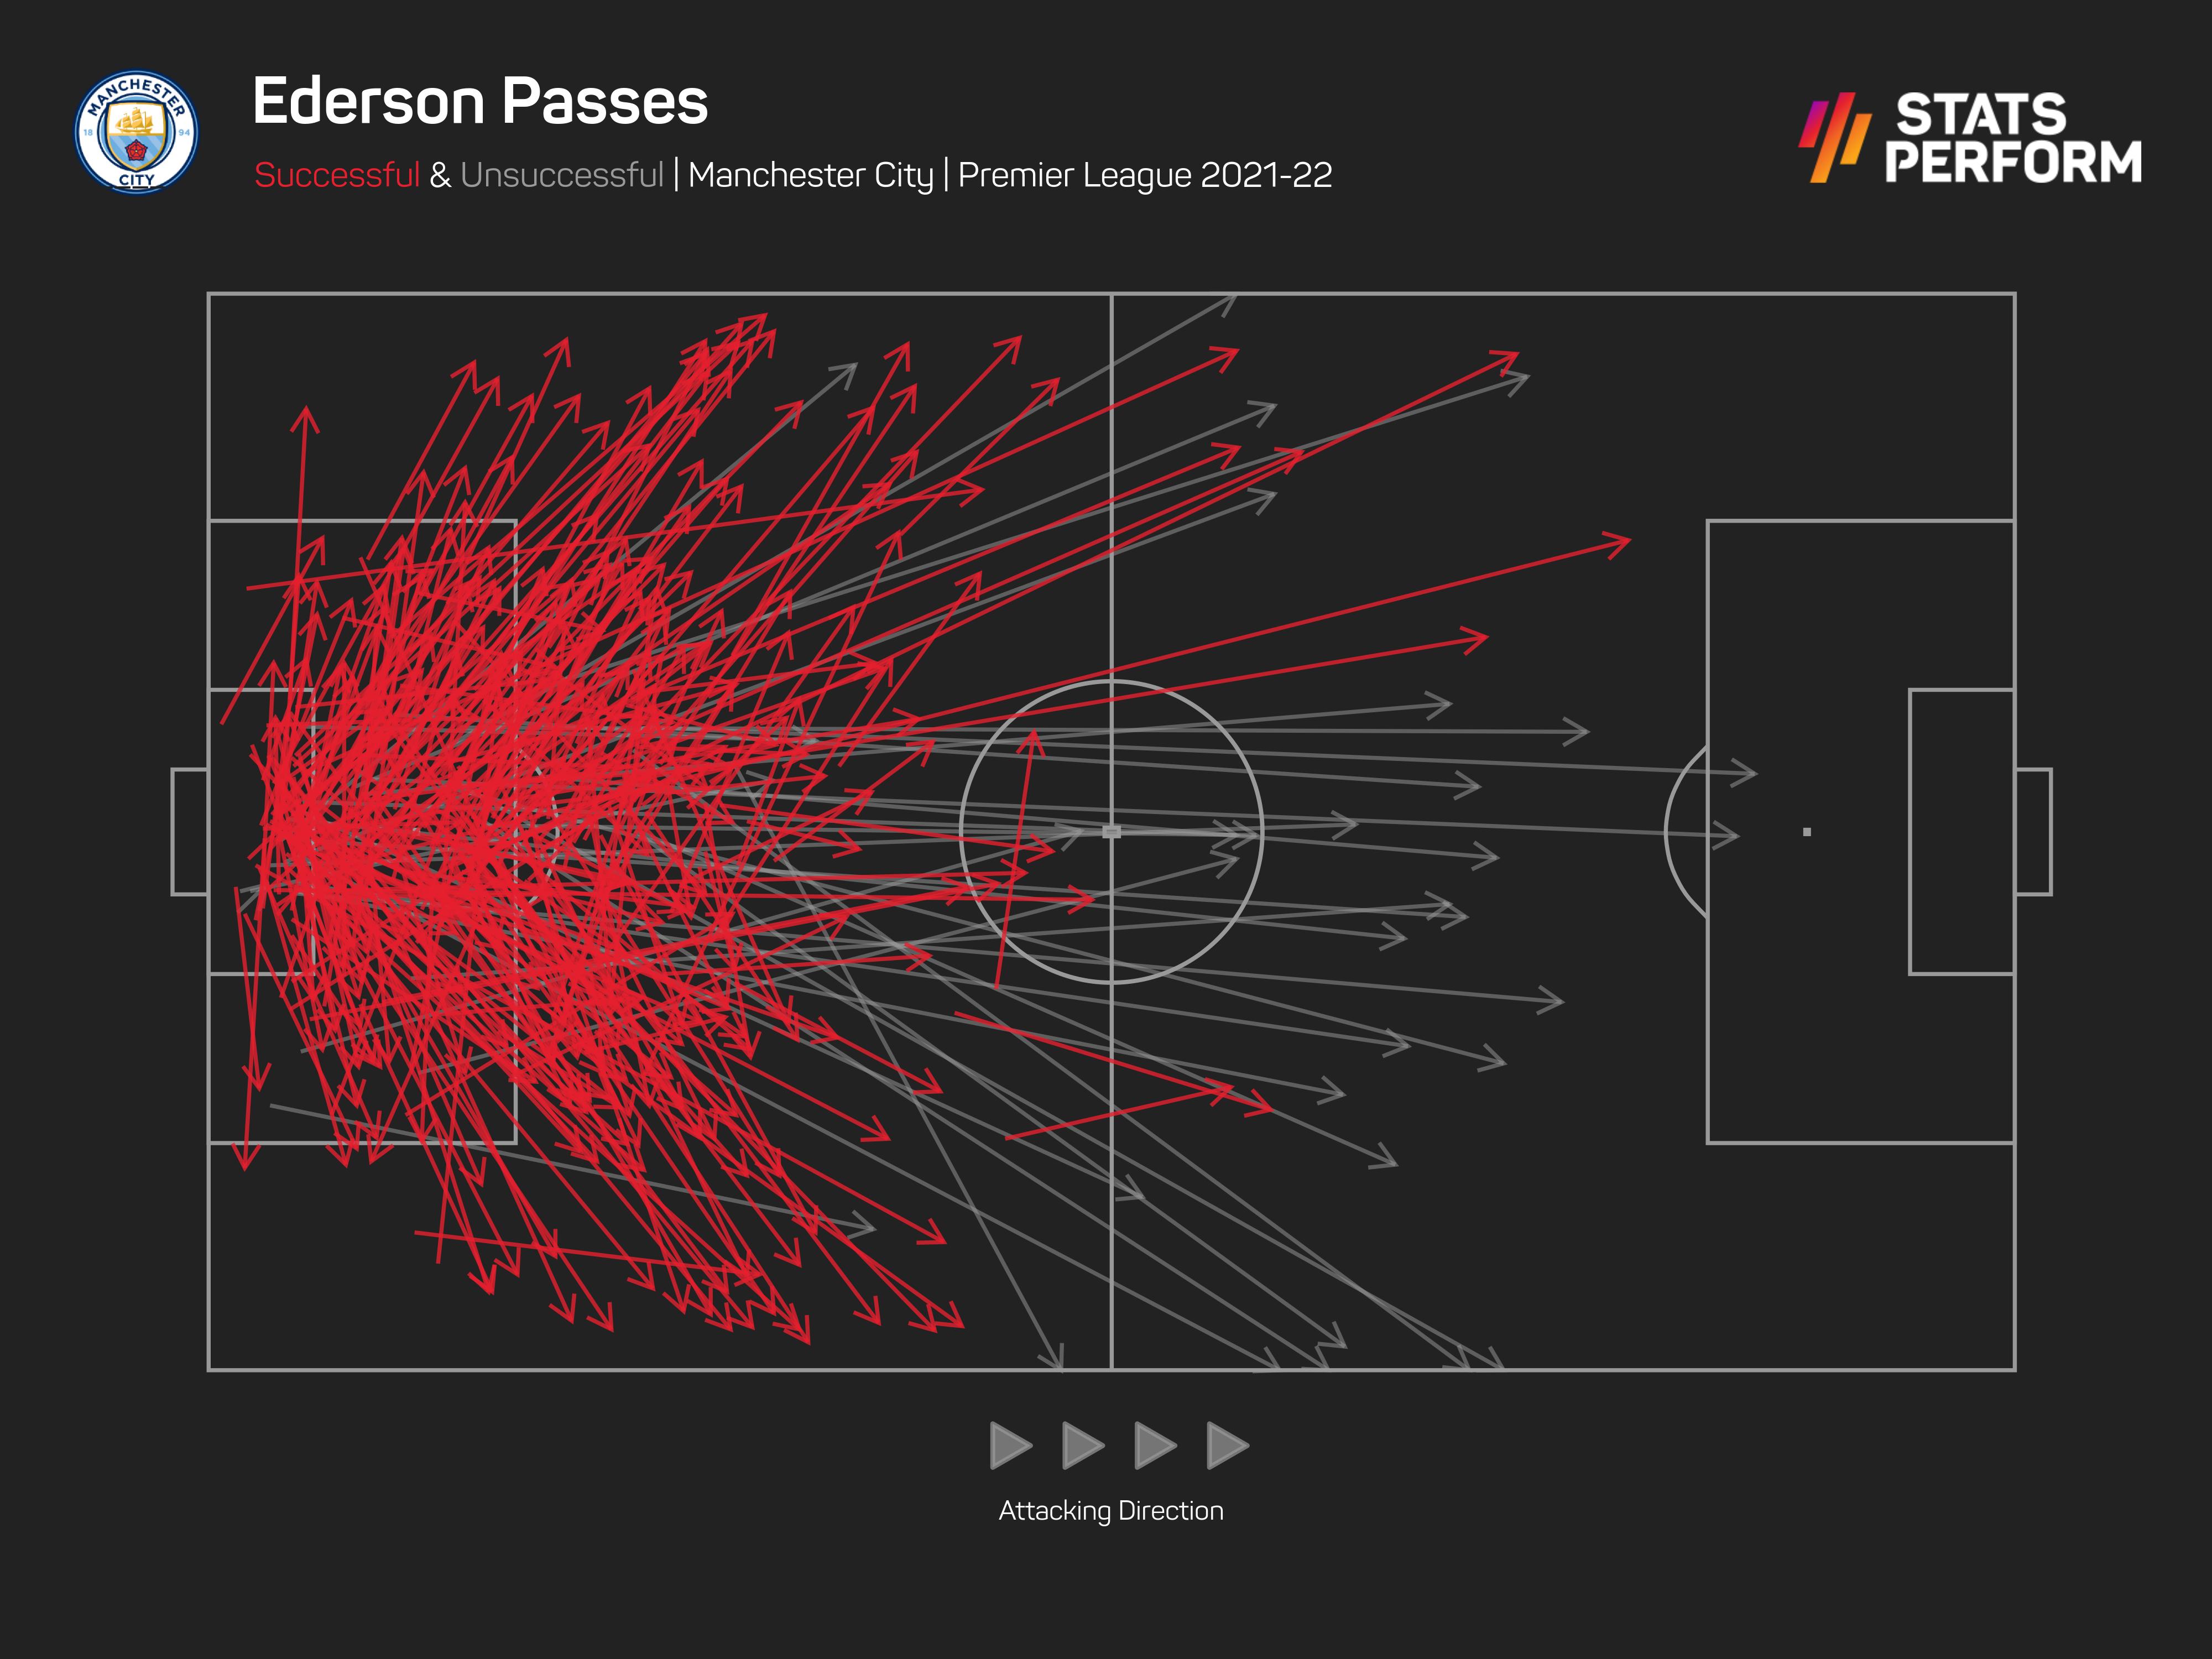 Ederson pass map in the 2021-22 Premier League